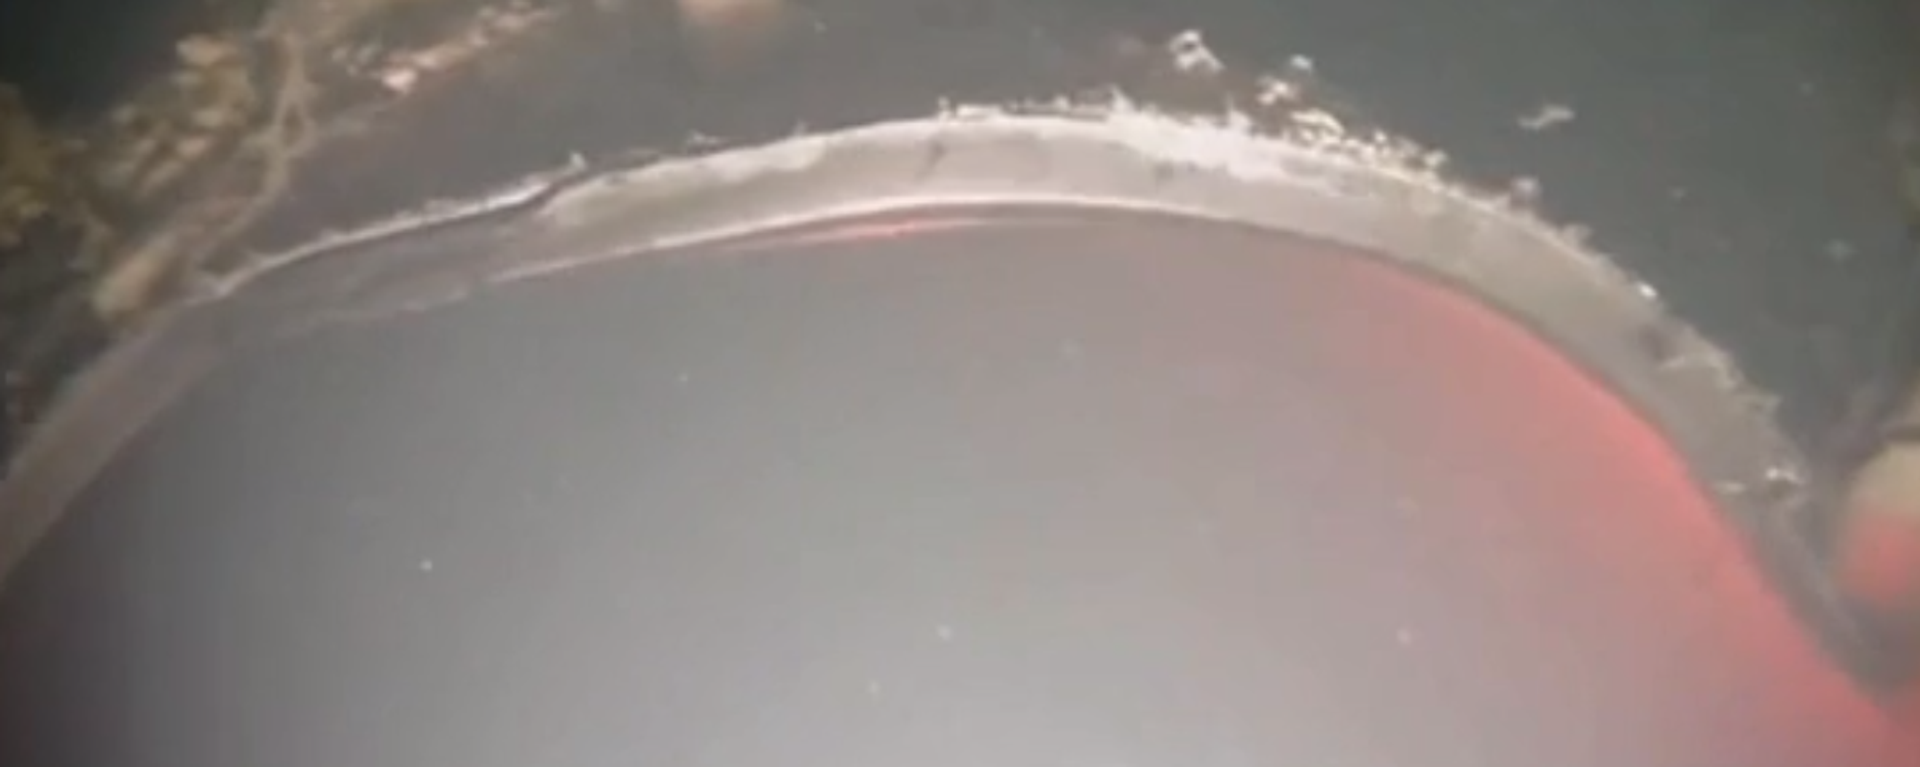 Screengrab of video by Swedish media showing underwater drone footage of damaged Nord Stream pipeline. - Sputnik International, 1920, 15.03.2023